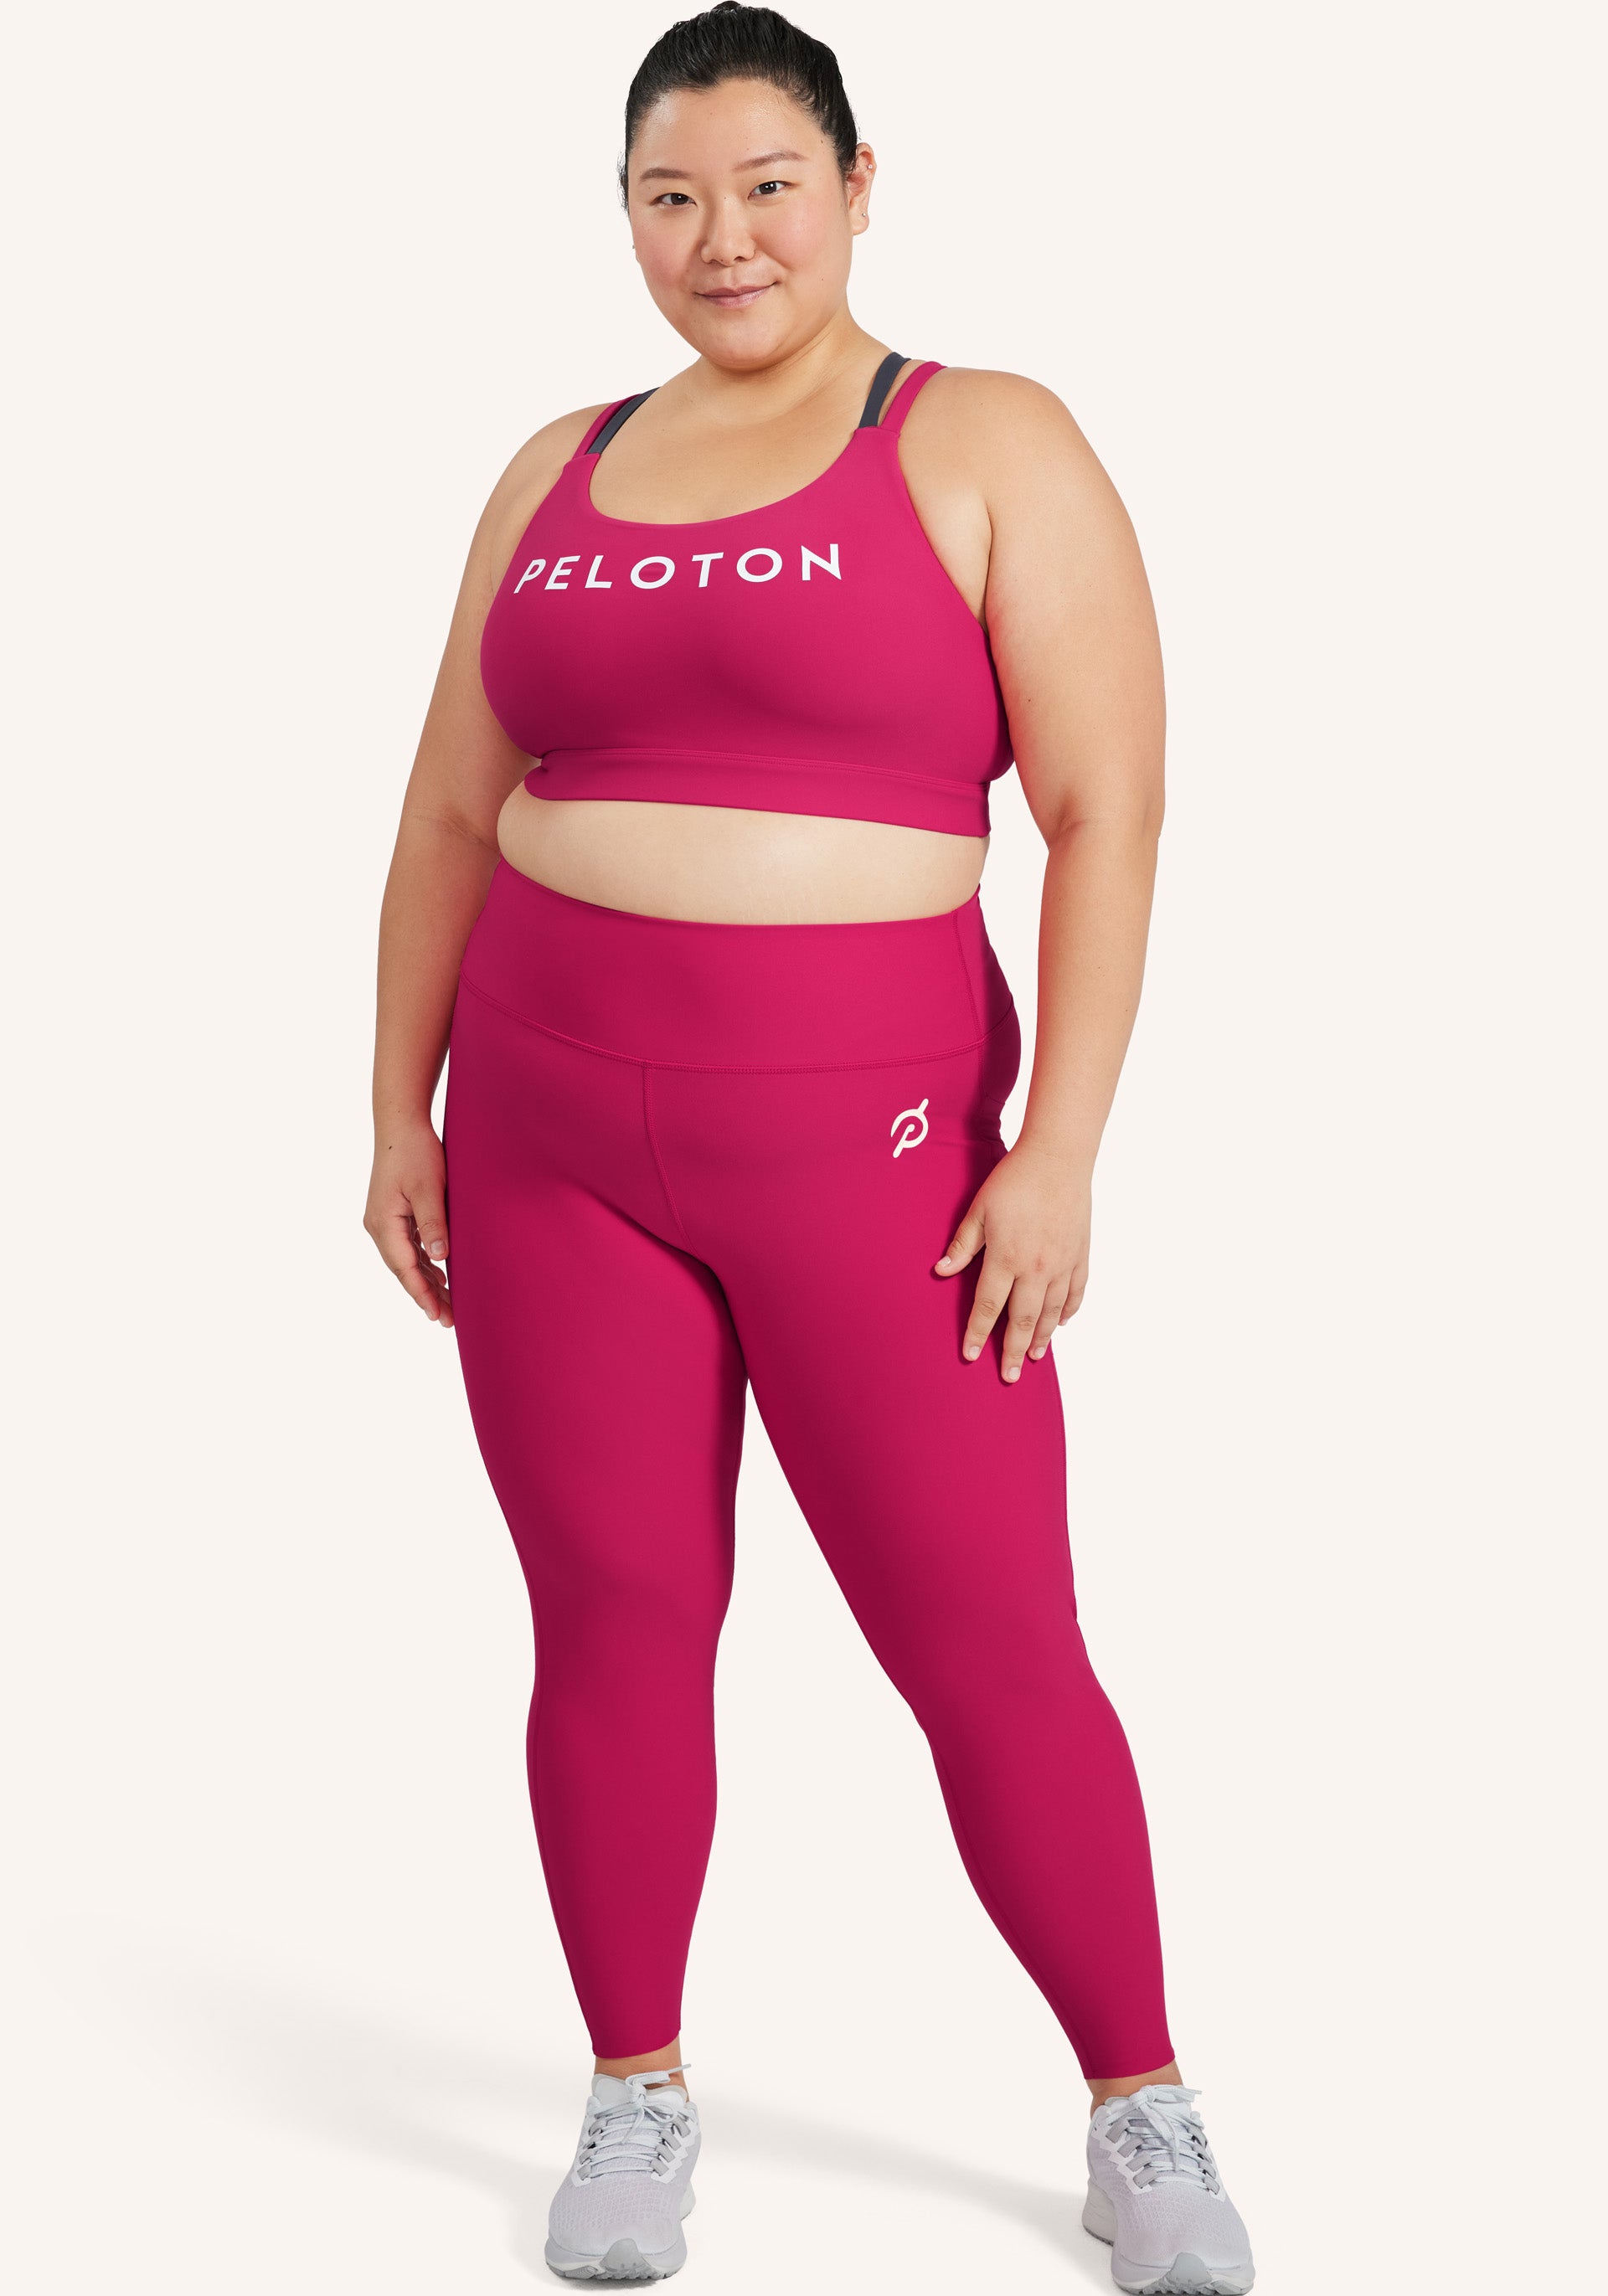 Peloton x Adidas set bra size xl and leggings size Large